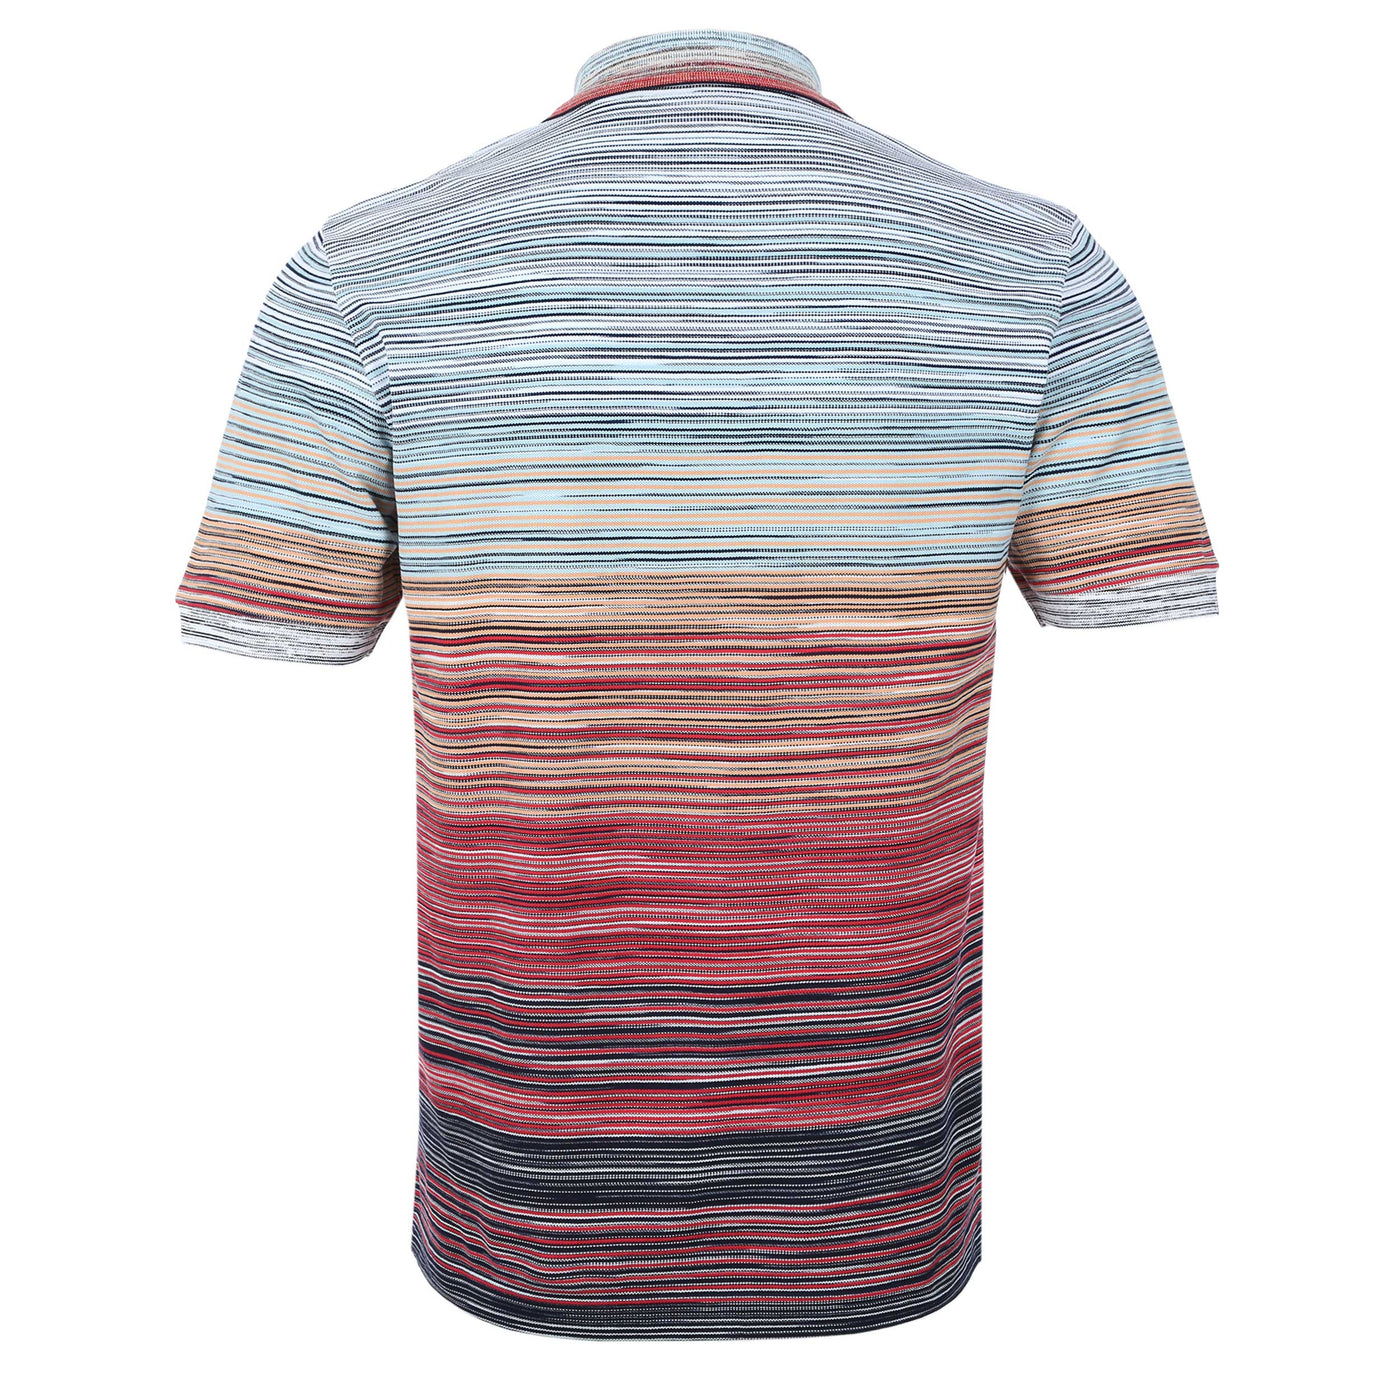 Missoni Stripe Polo Shirt in Blue, Orange & Red Back